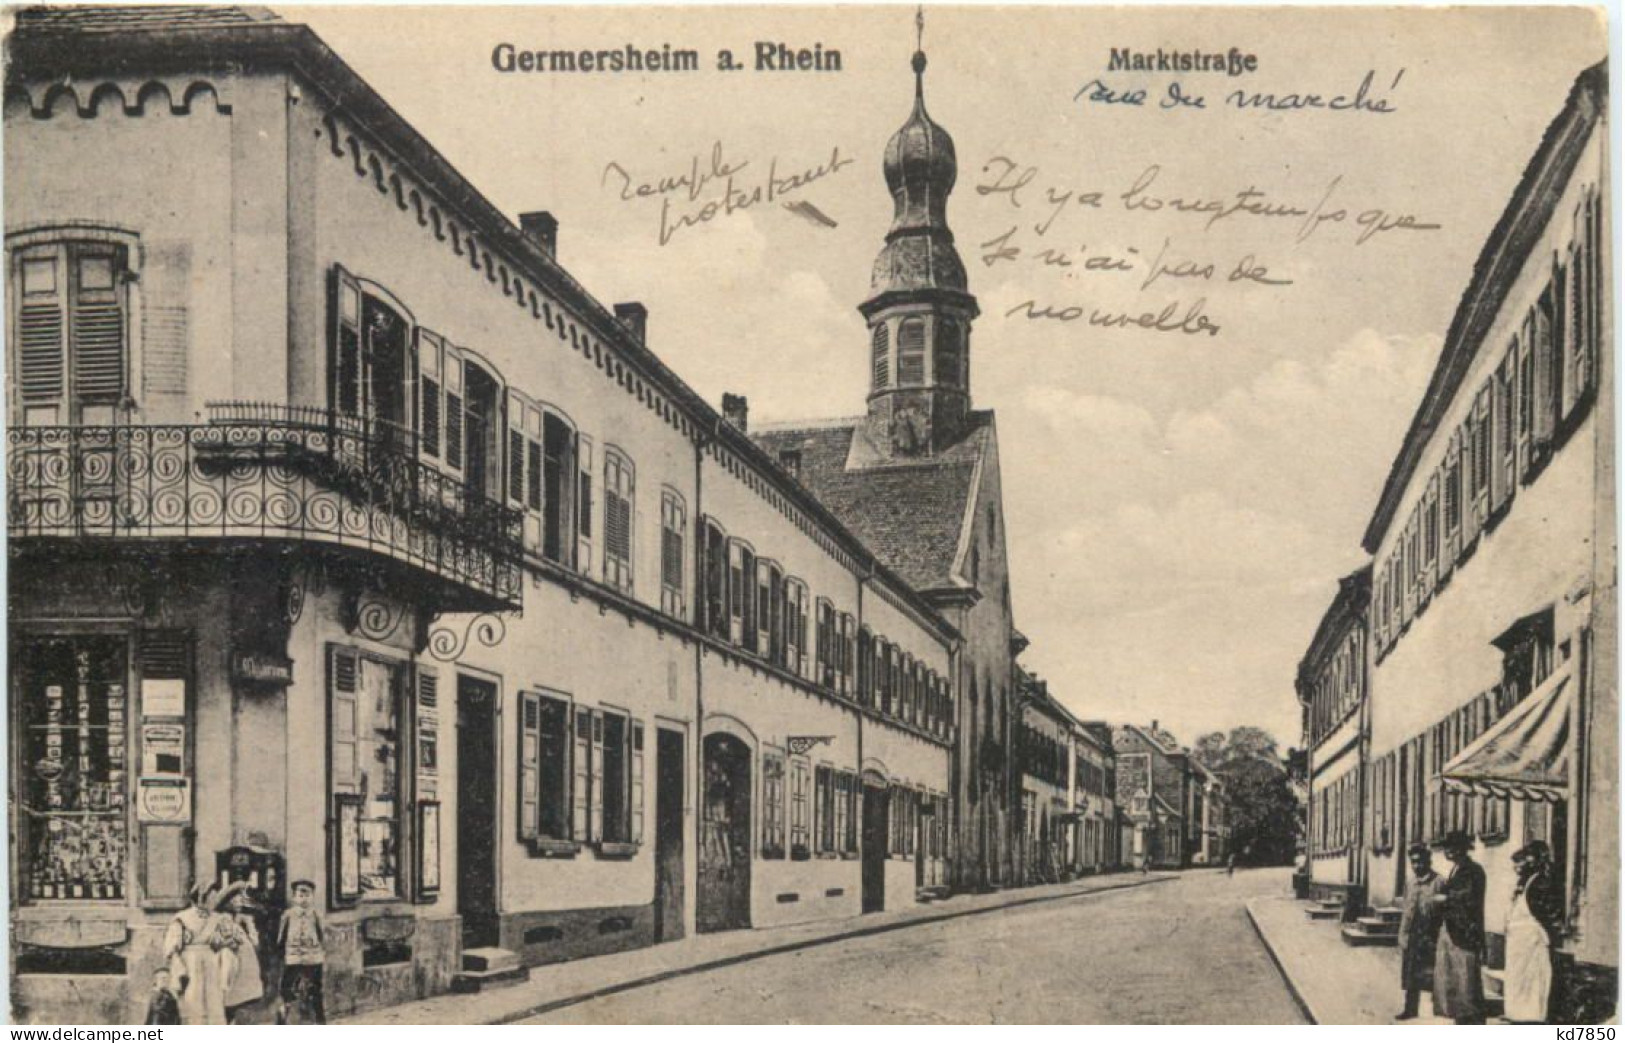 Germersheim - Marktstraße - Germersheim